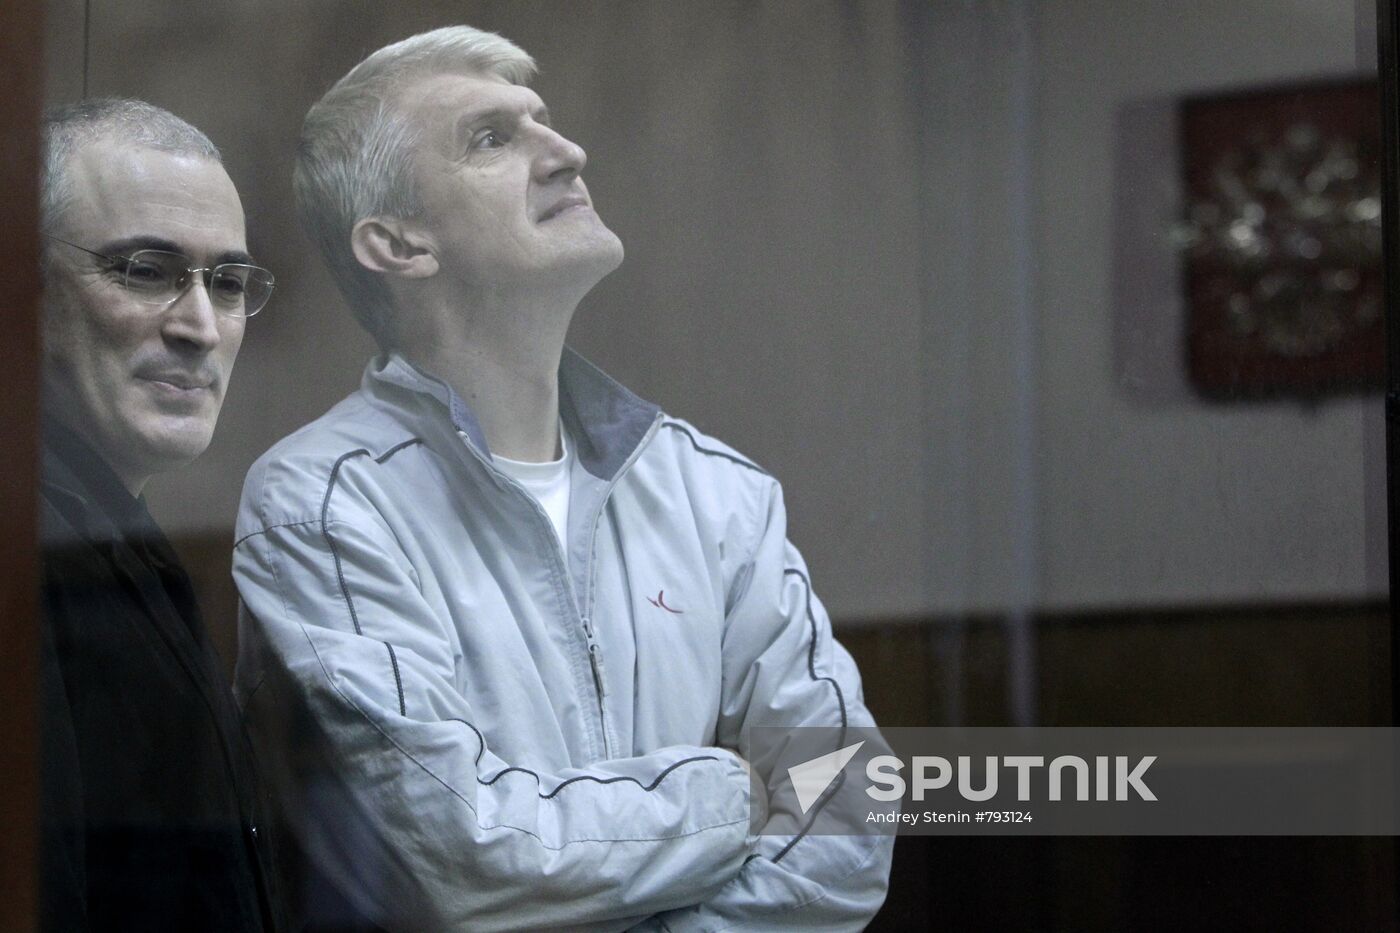 Mikhail Khodorkovsky, Platon Lebedev